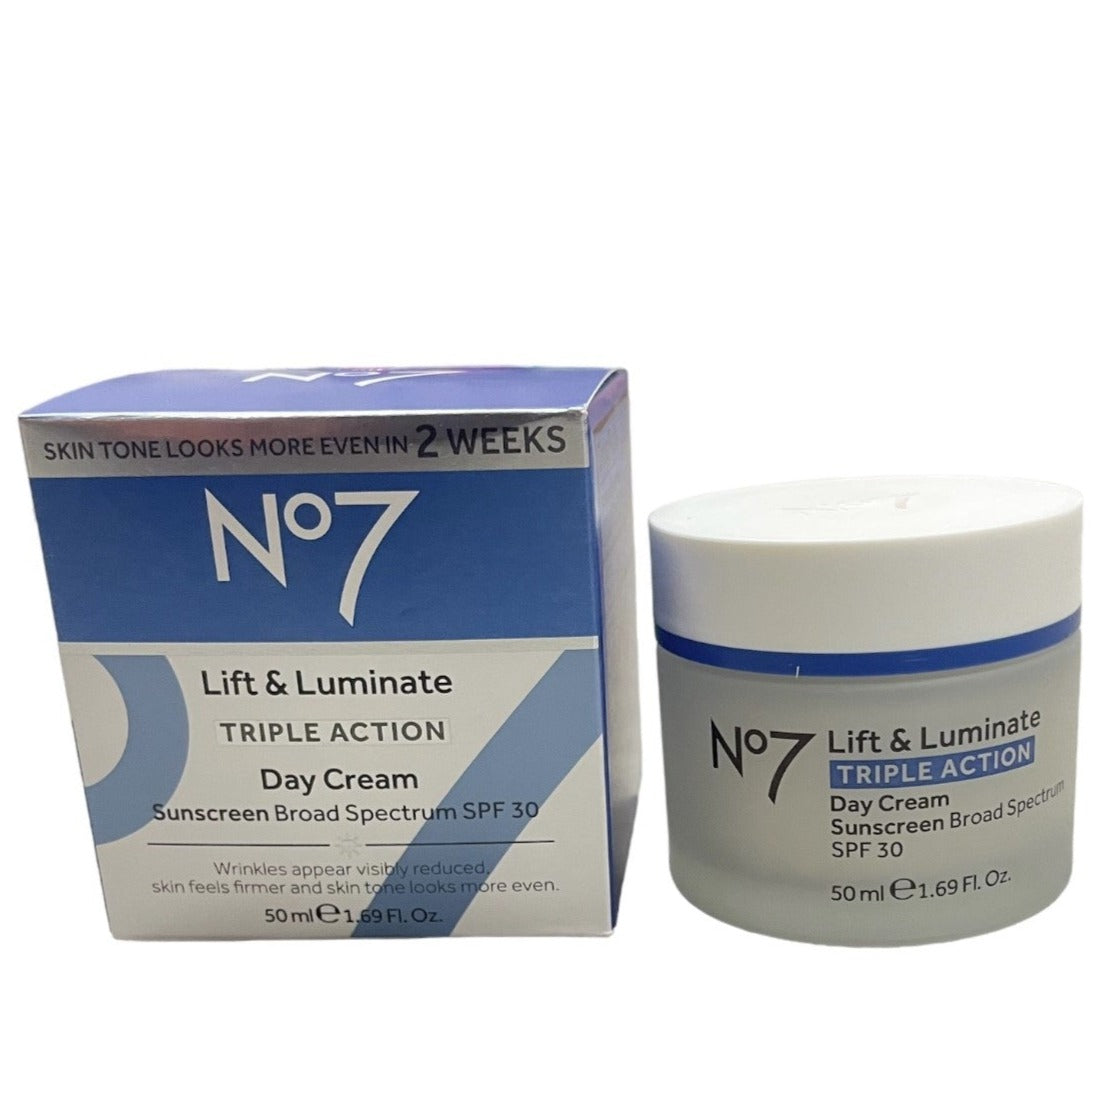 New No7 Lift & Luminate Triple Action Day Cream SPF 30 1.69 Fl Oz